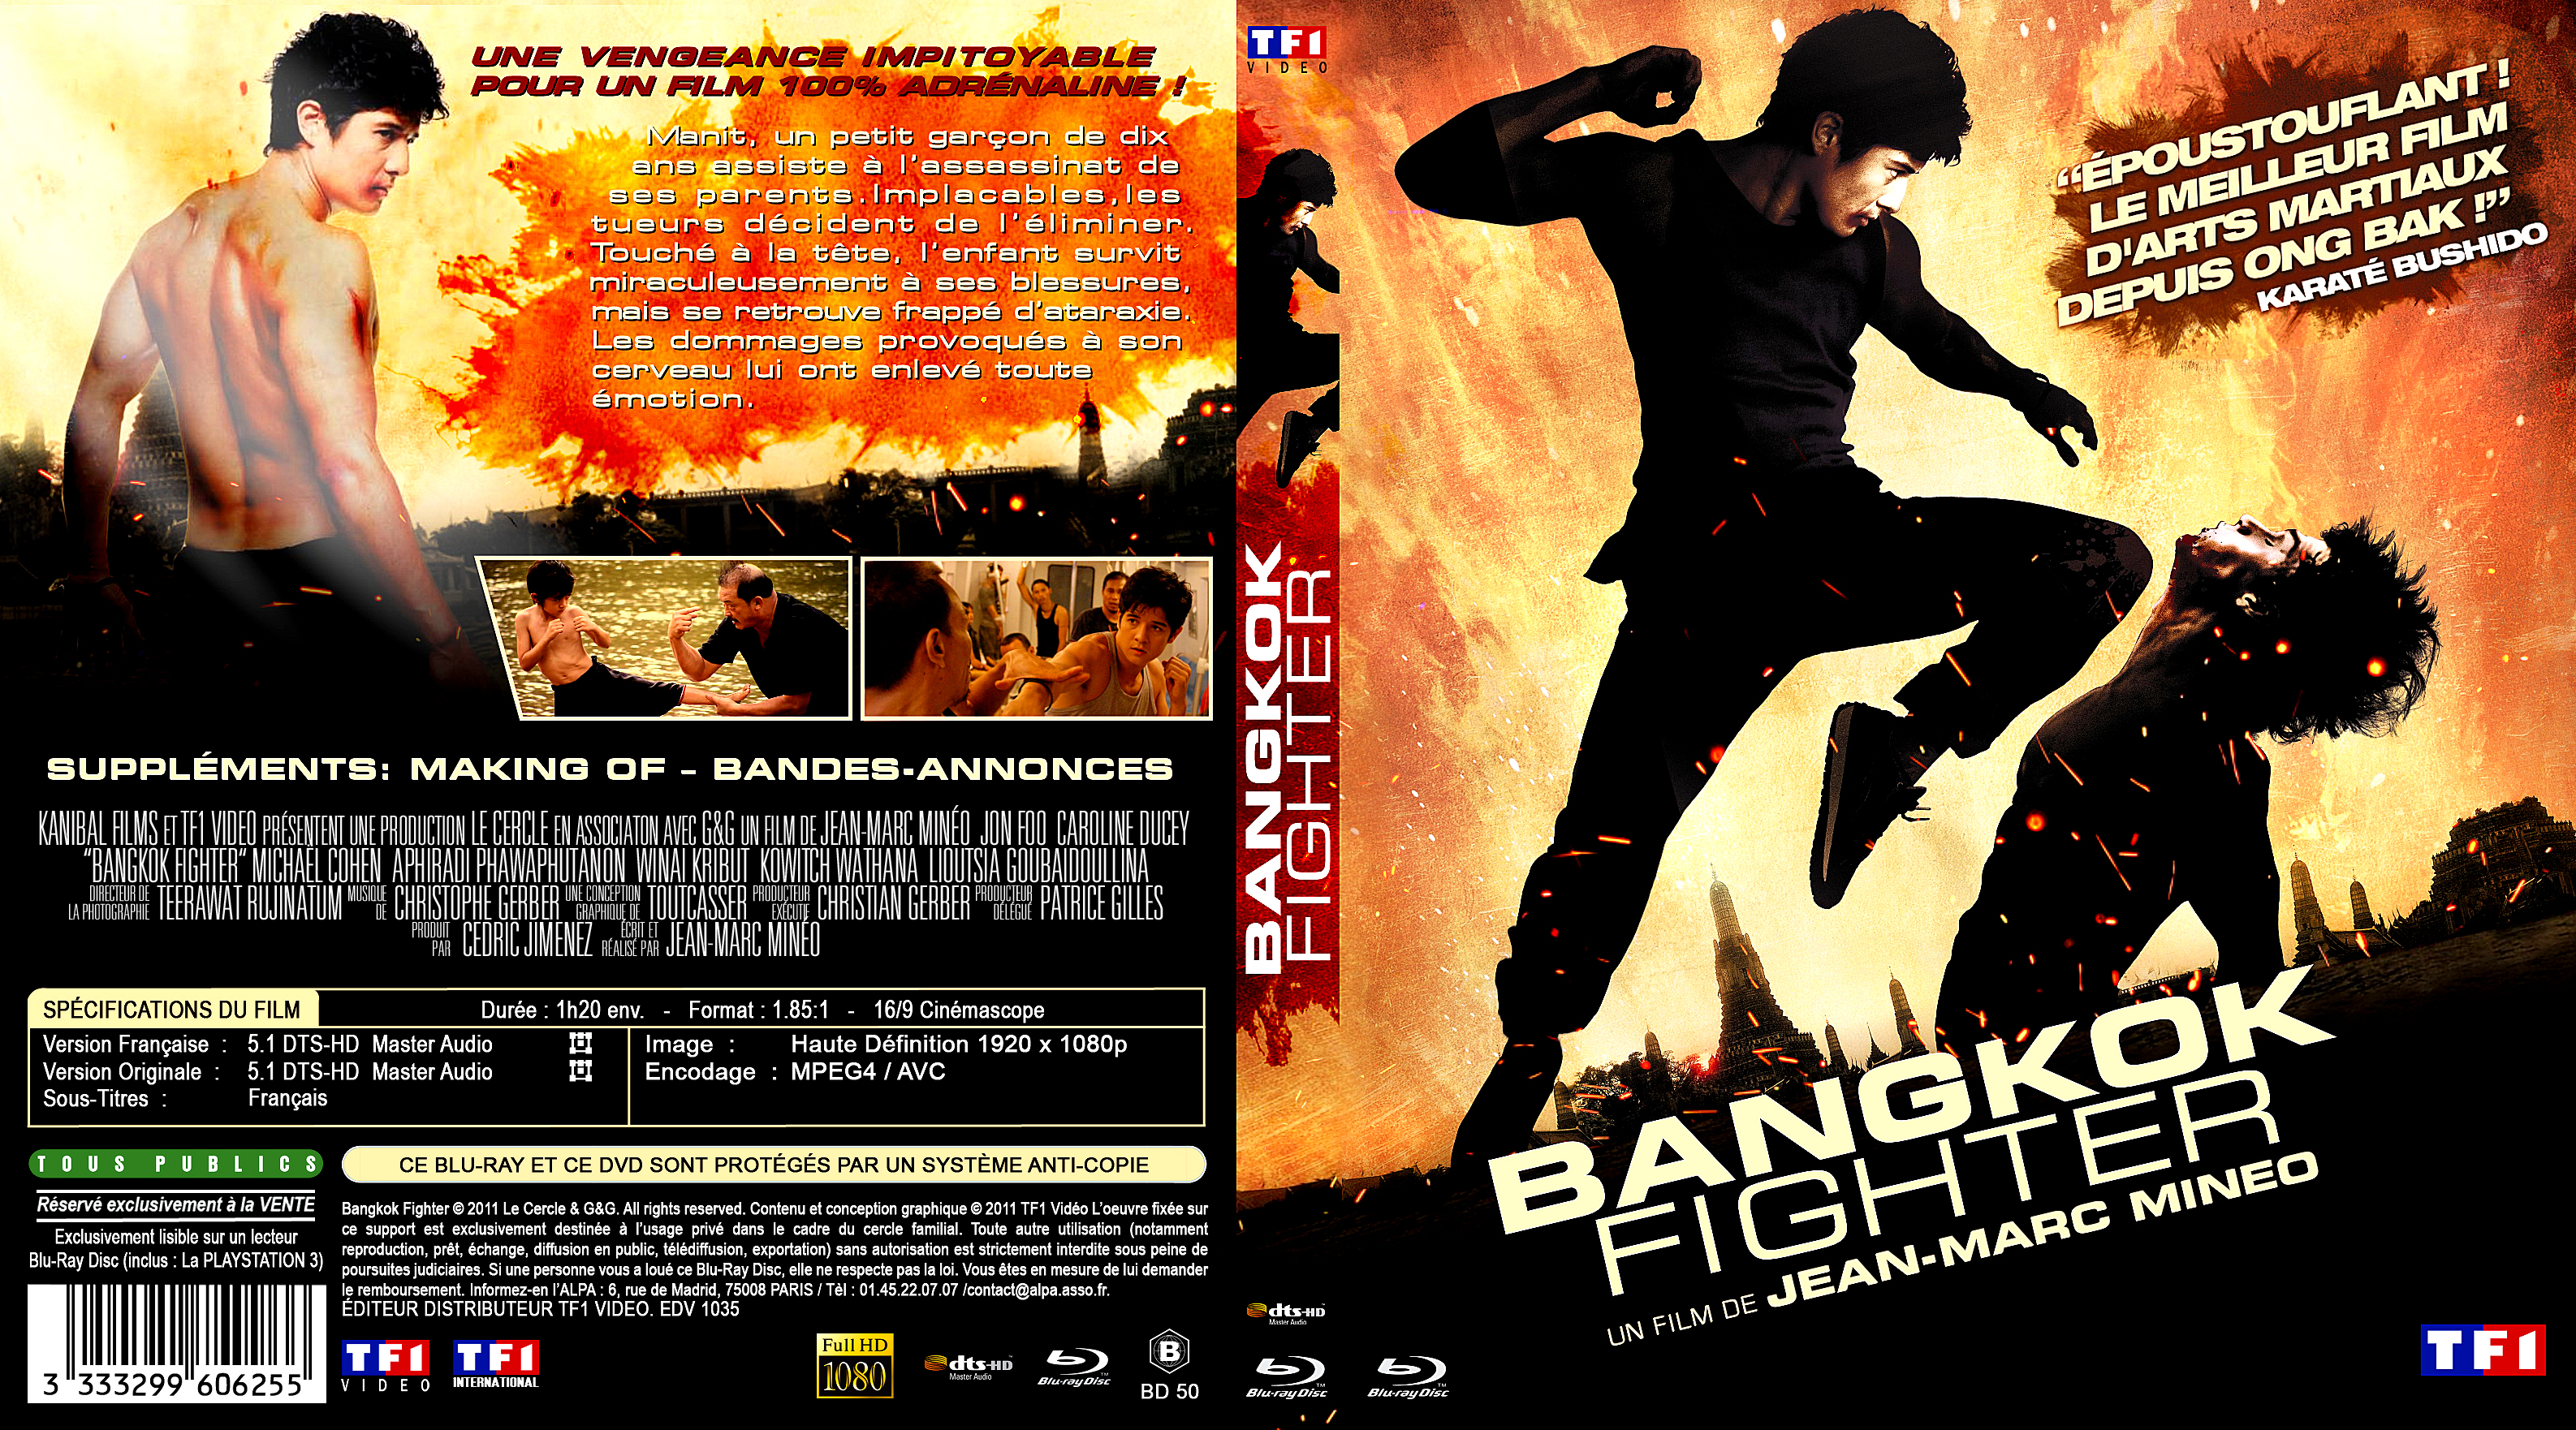 Jaquette DVD Bangkok Fighter custom (BLU-RAY)